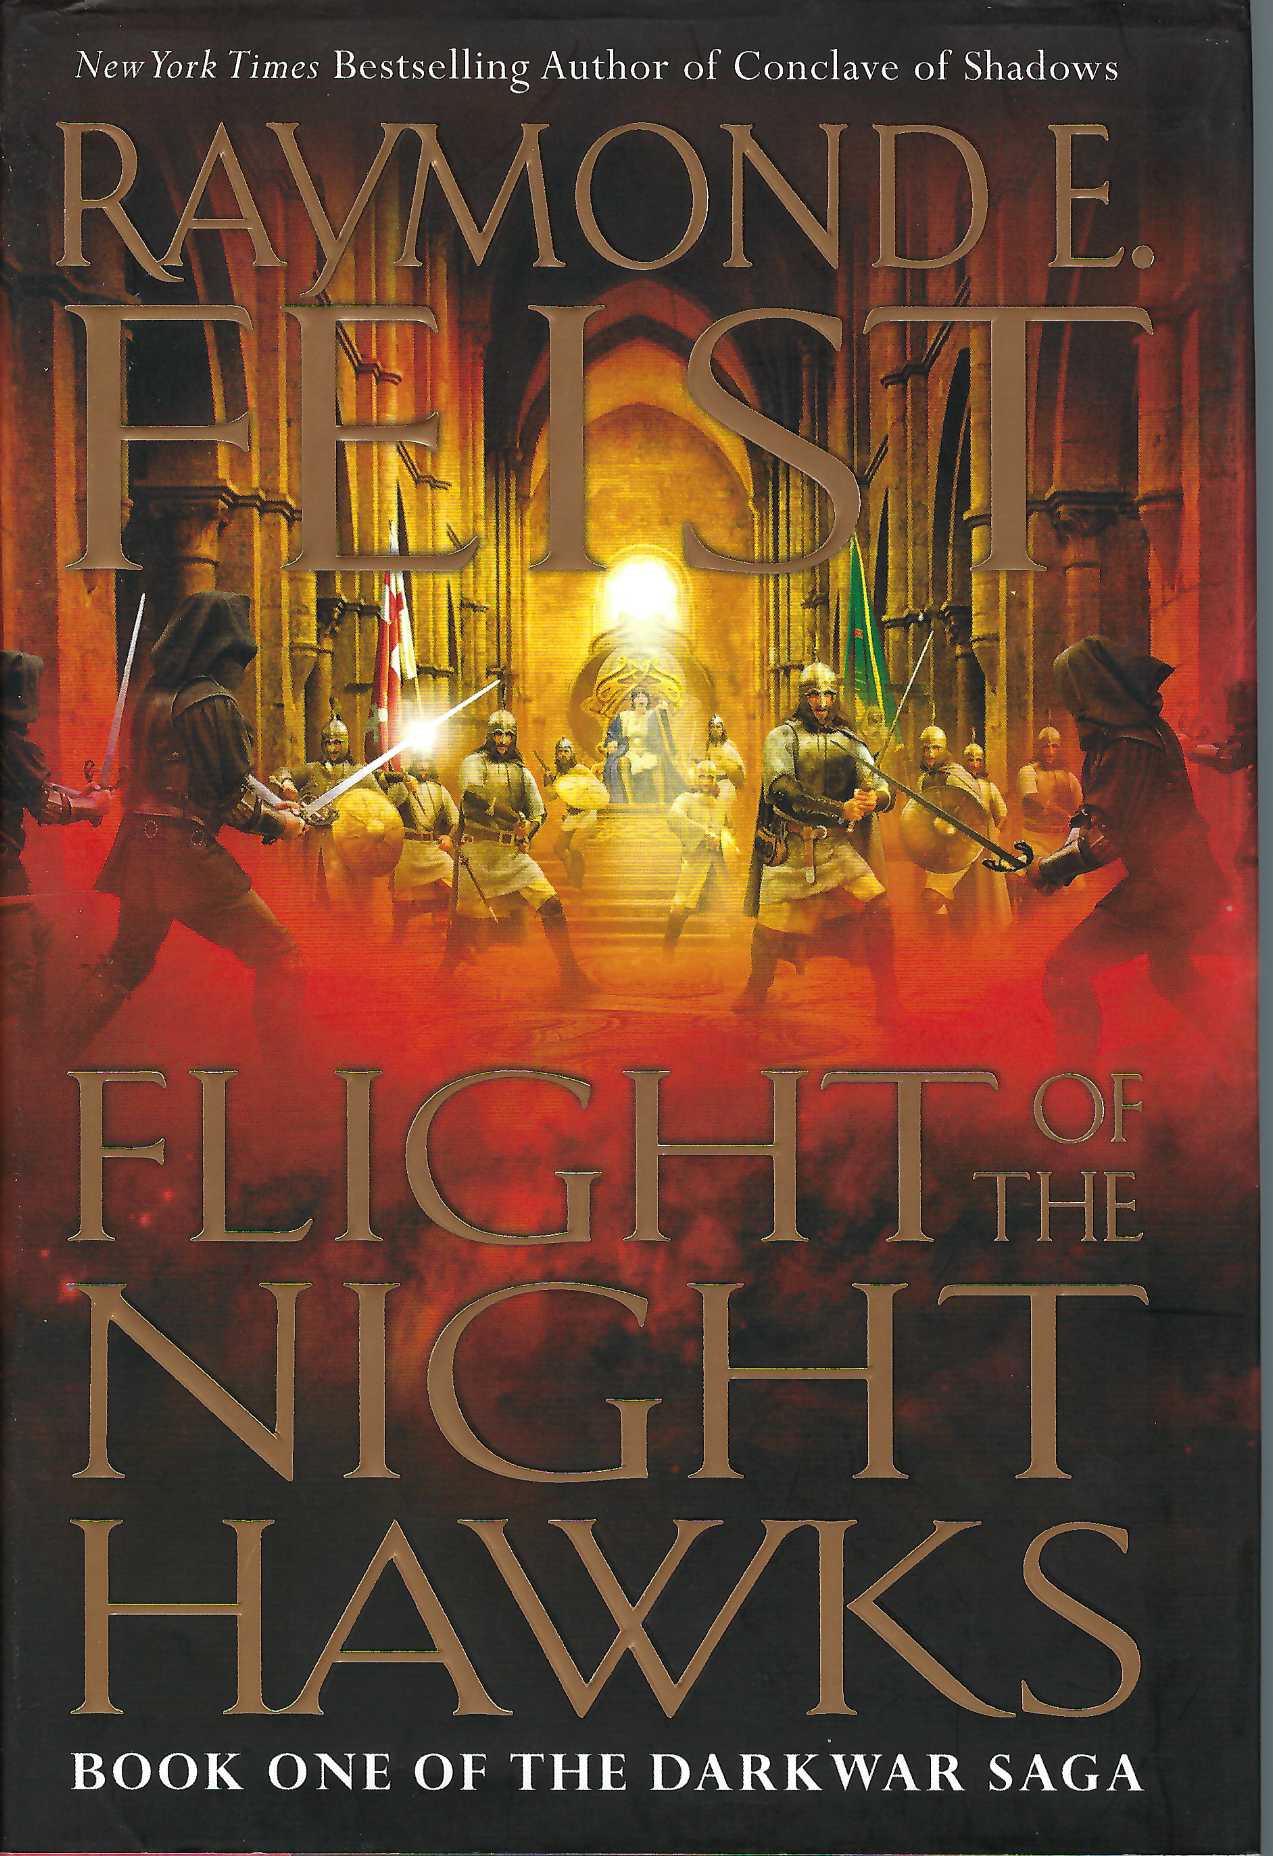 FEIST, RAYMOND E - Flight of the Nighthawks Book One of the Darkwar Saga